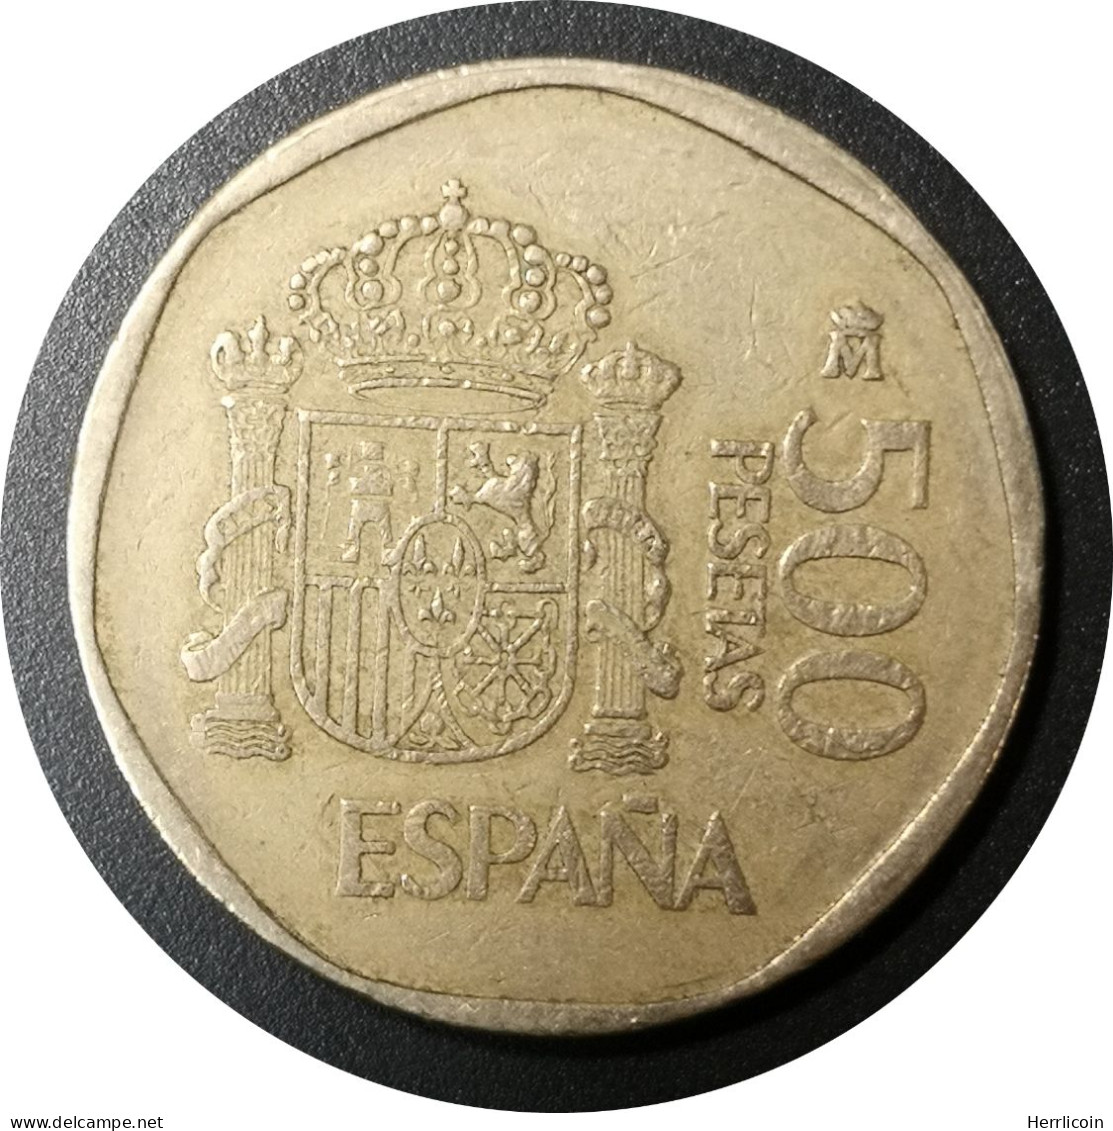 Monnaie Espagne - 1988 - 500 Pesetas Juan Carlos I - 500 Pesetas